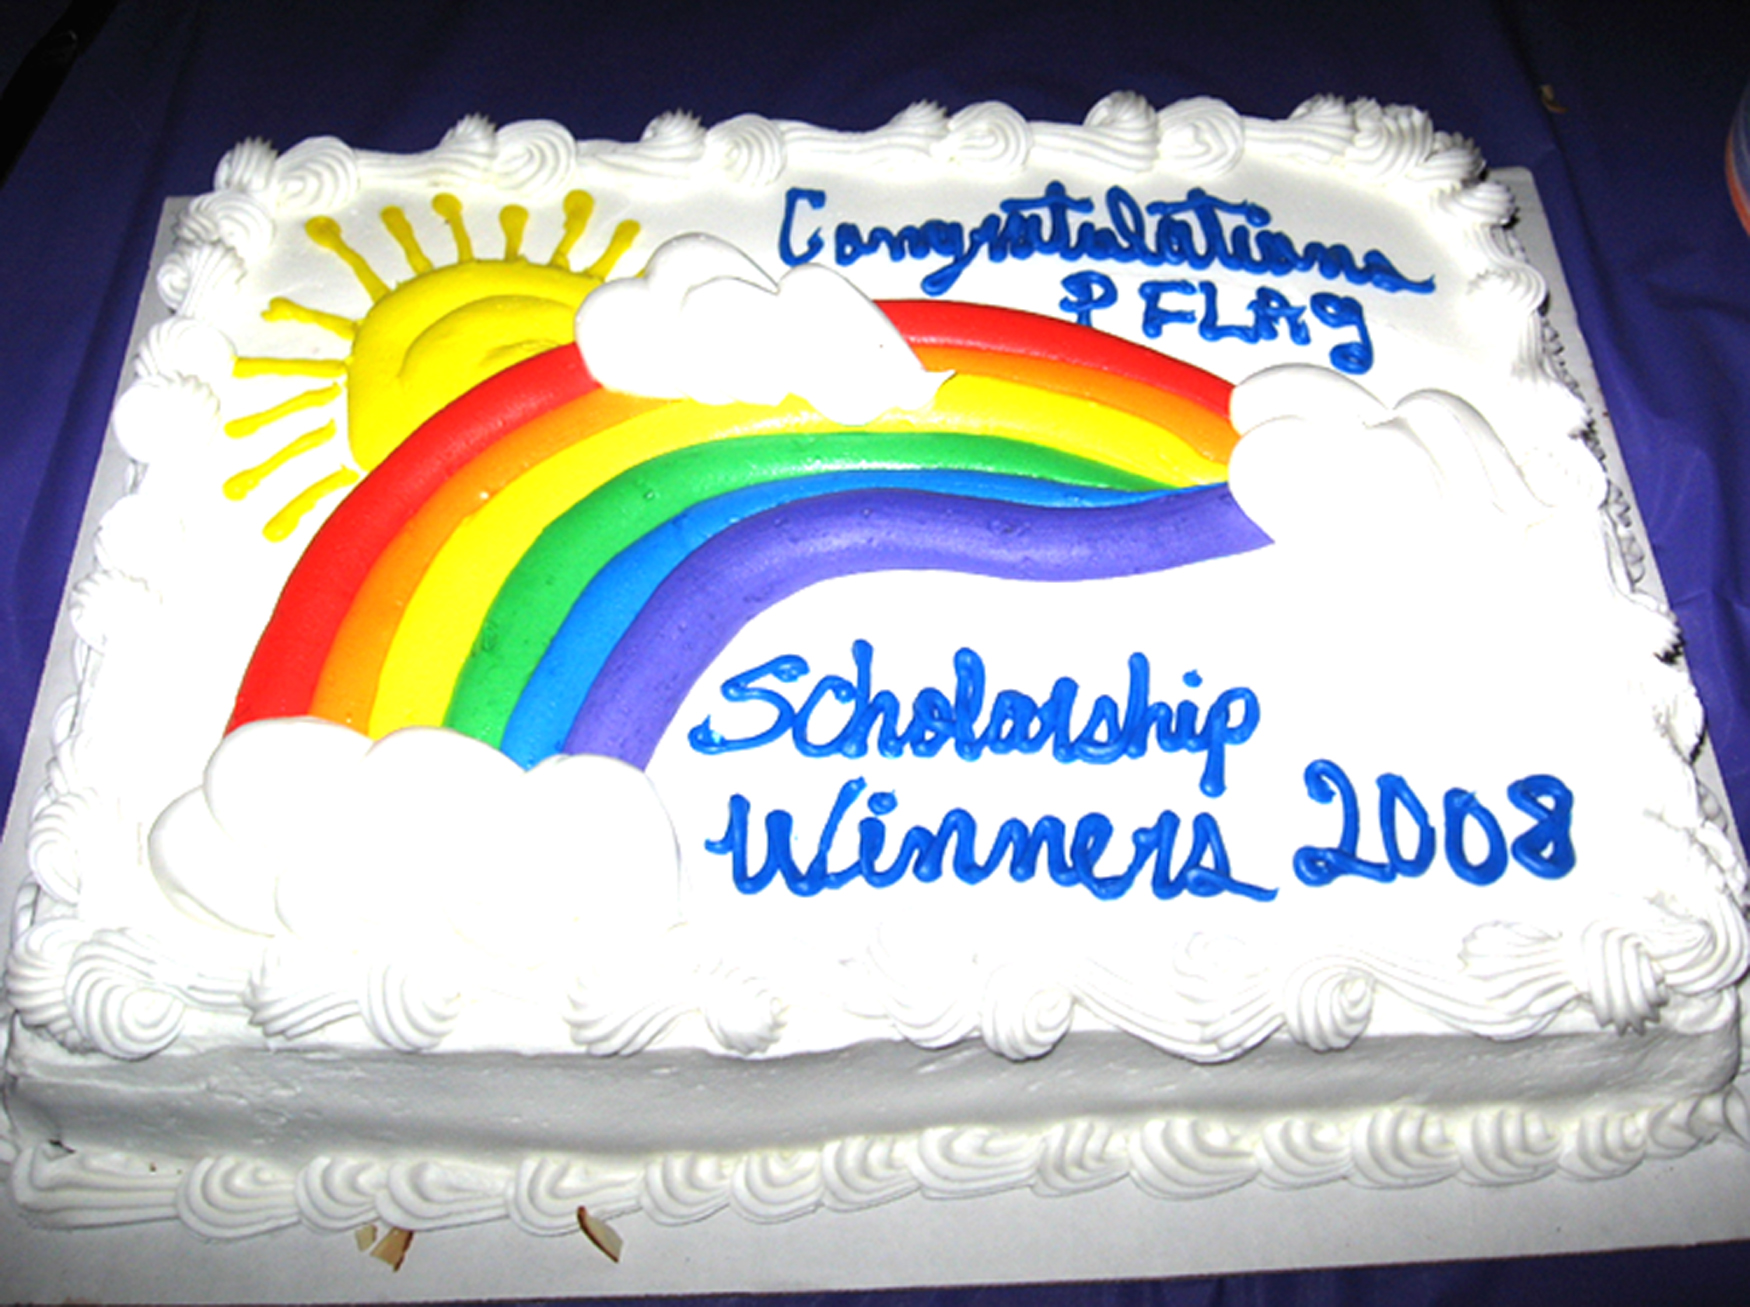 Congratulations Scholarship Winners Cake